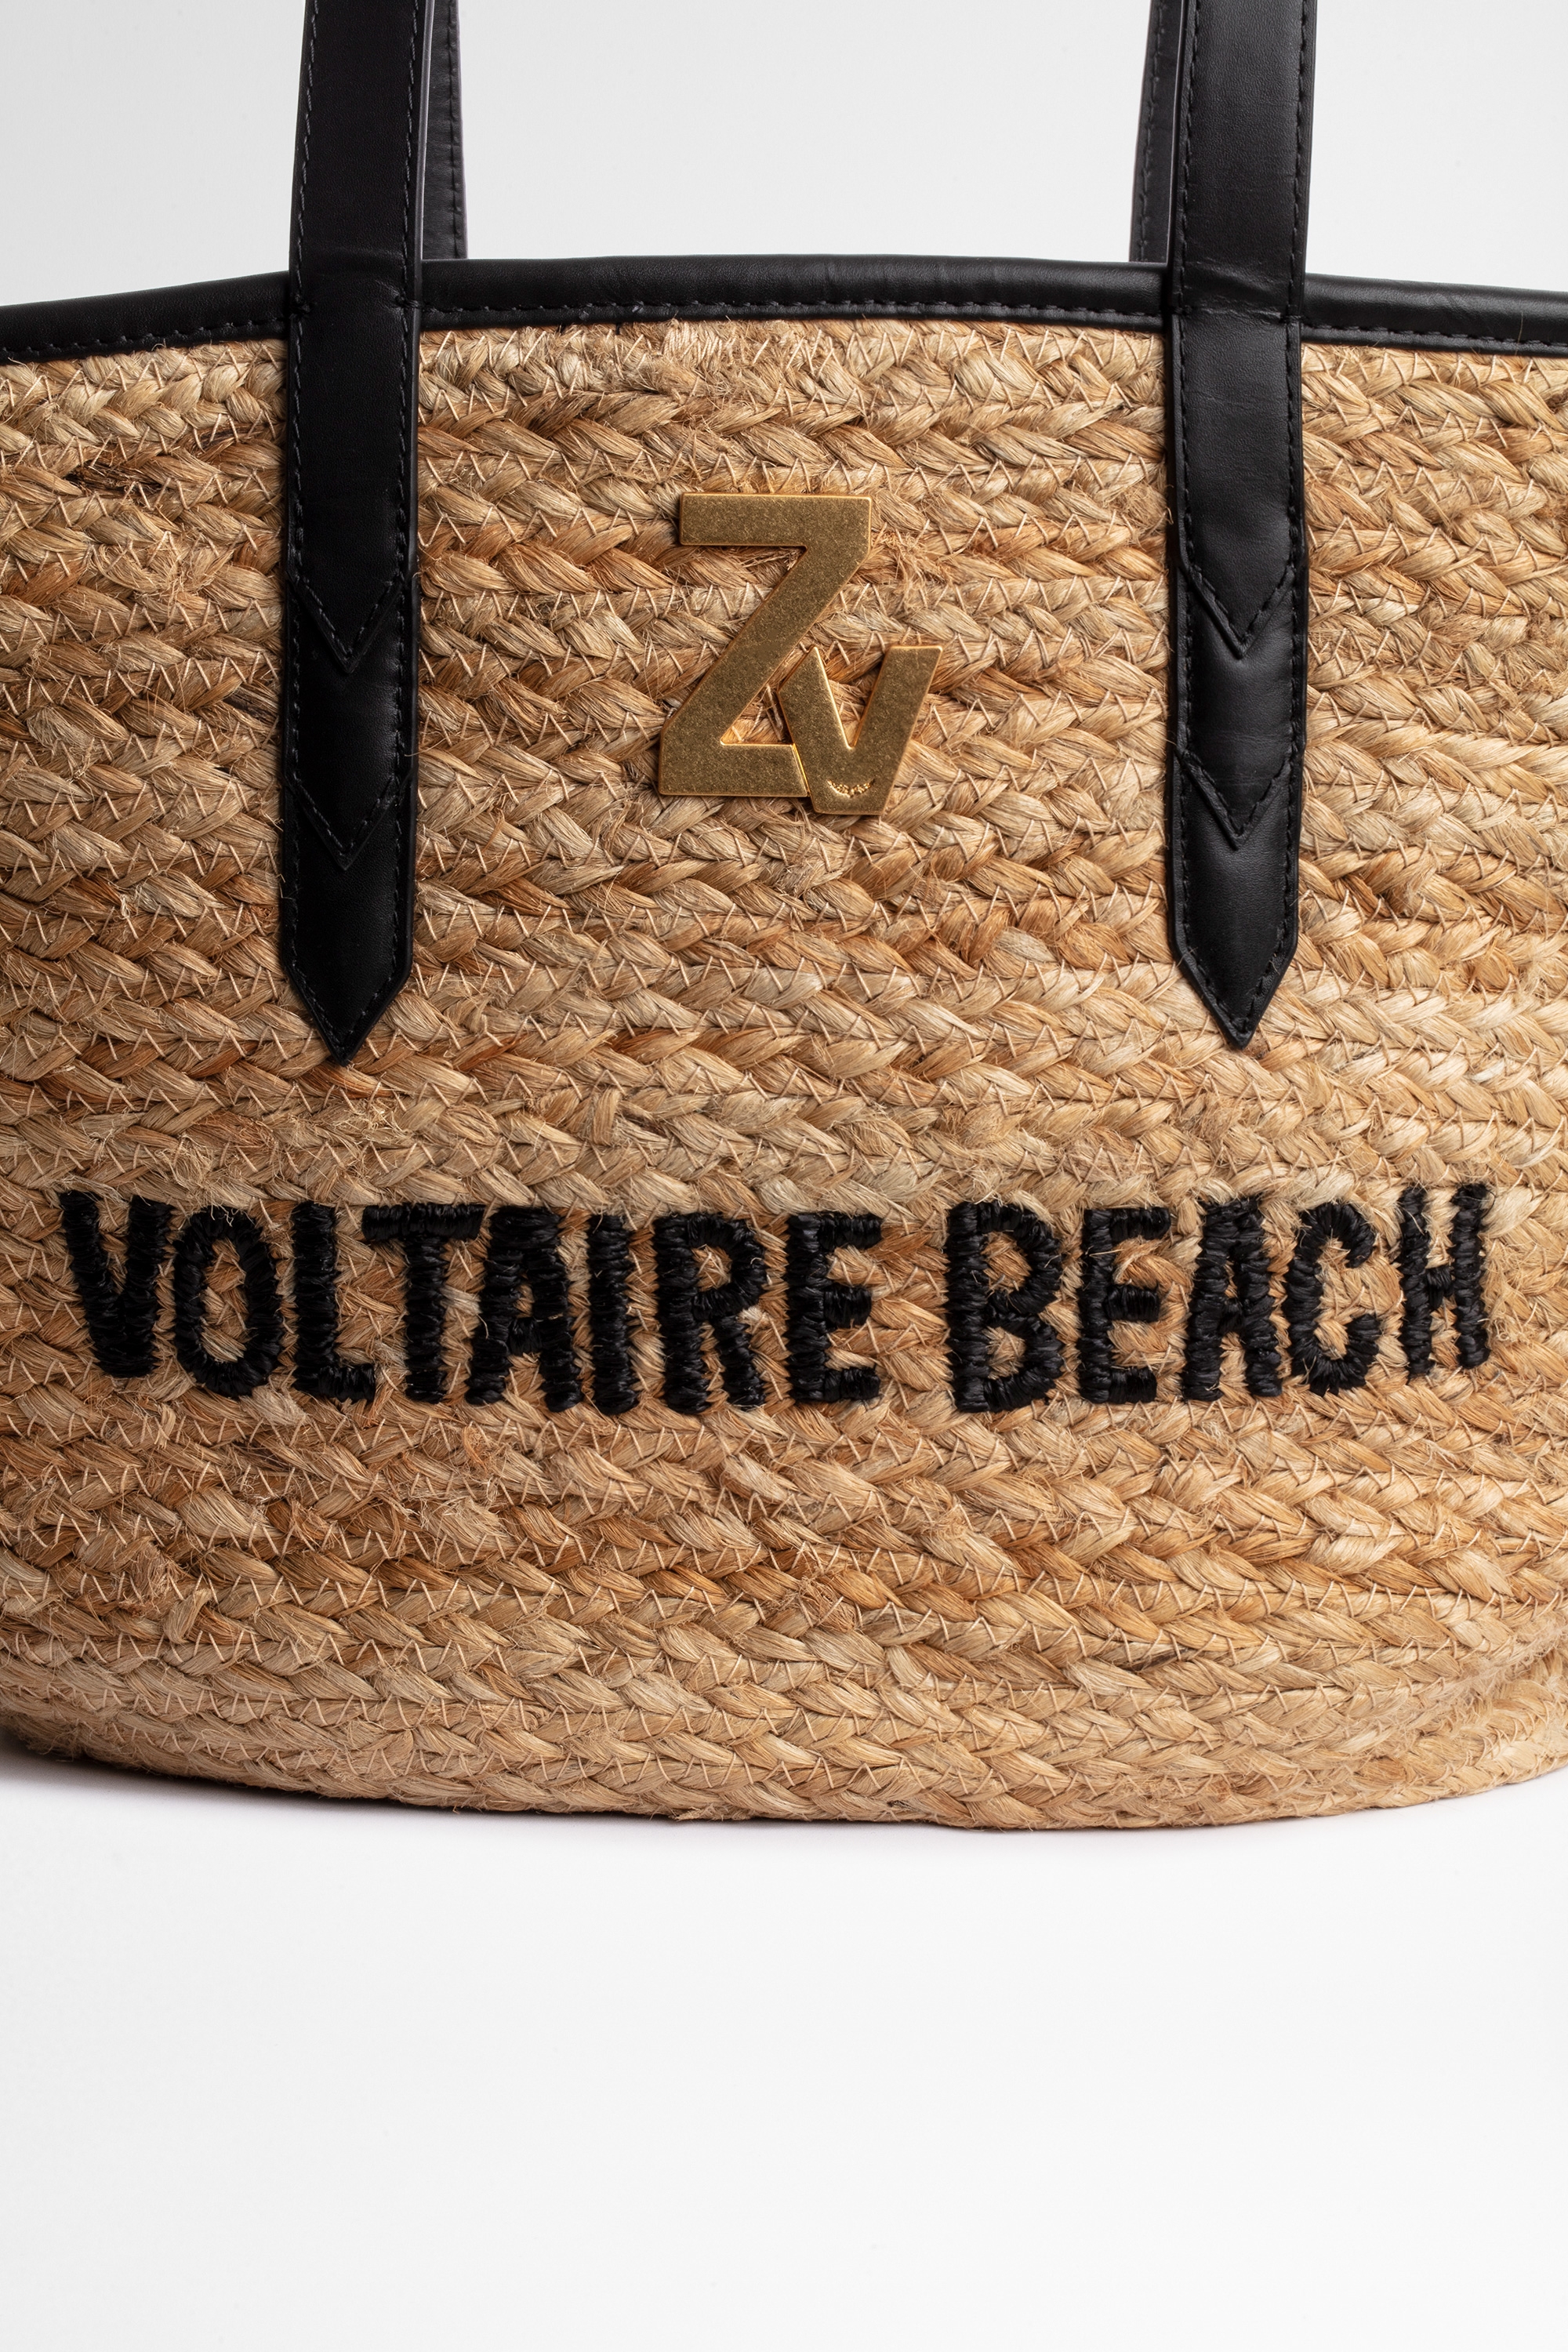 ZV Initiale Le Beach Bag